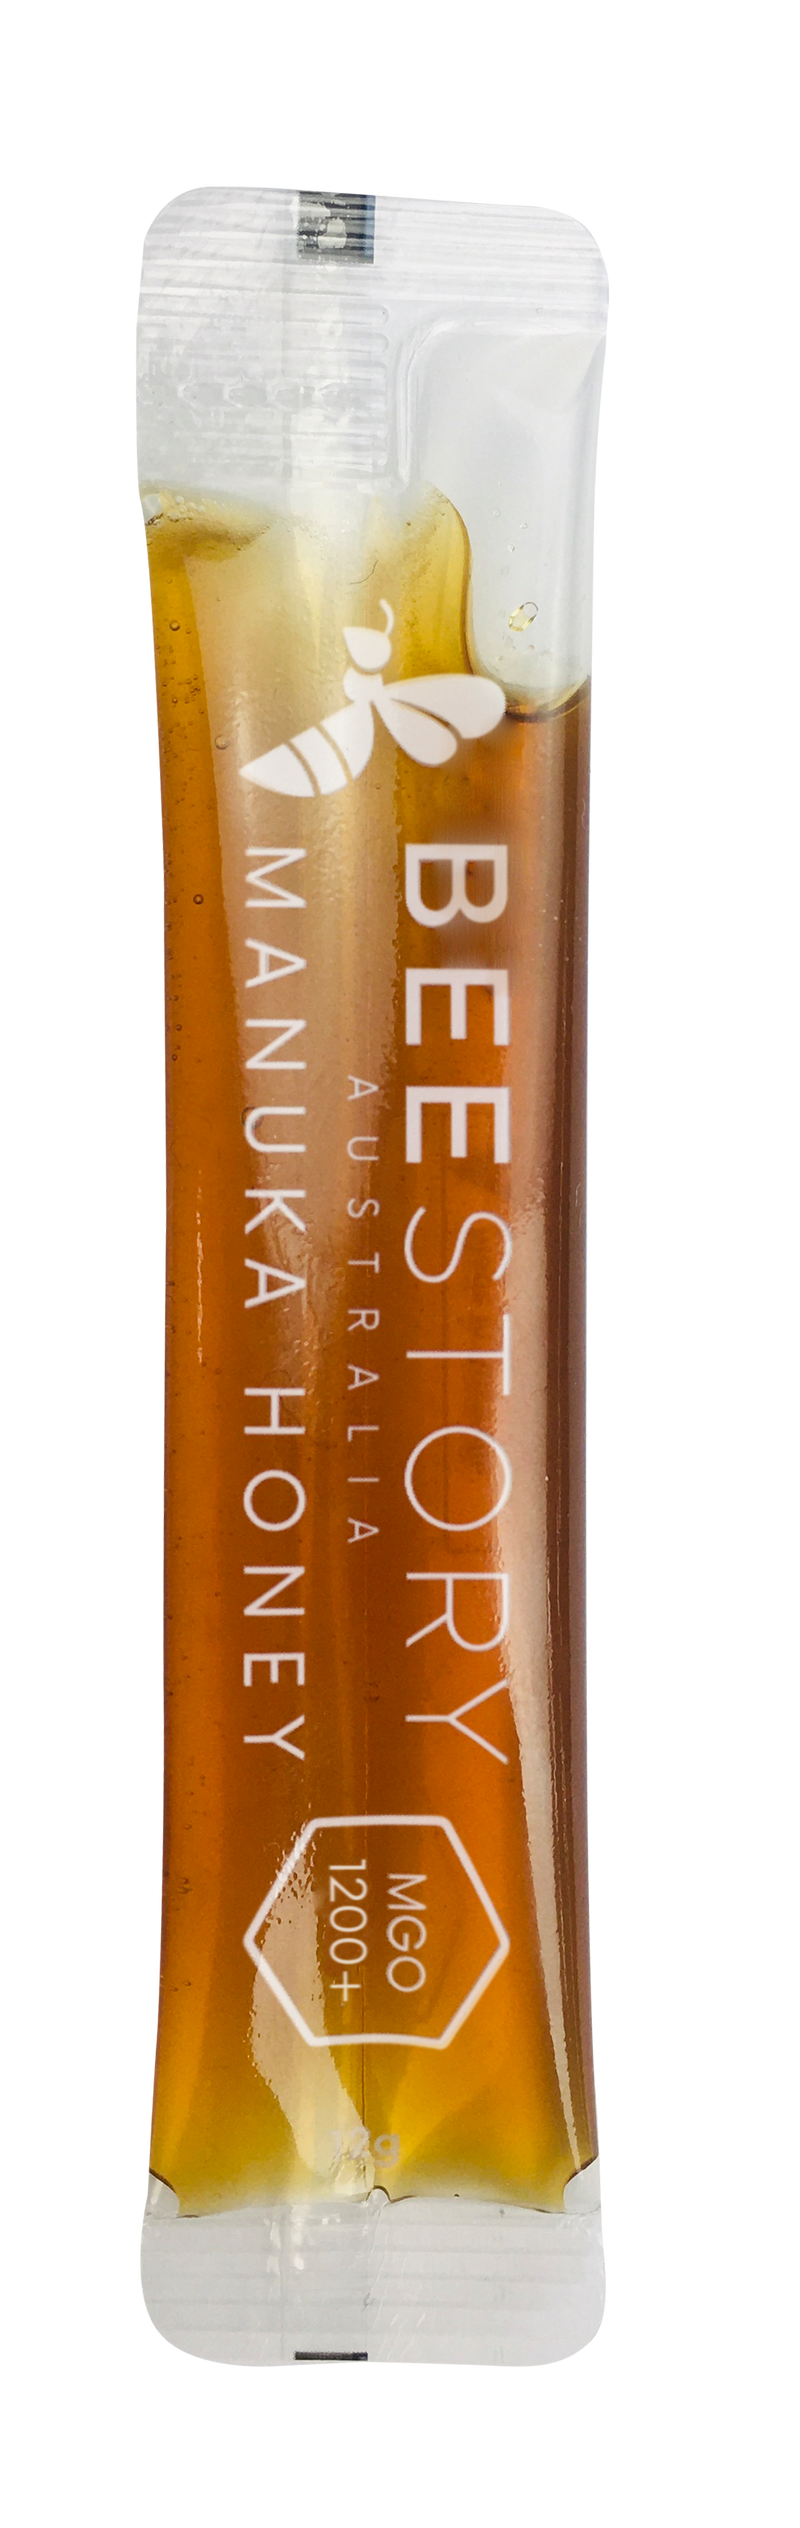 BEESTORY Manuka Honey Stick MGO 1200+ (12g x 30 sticks)